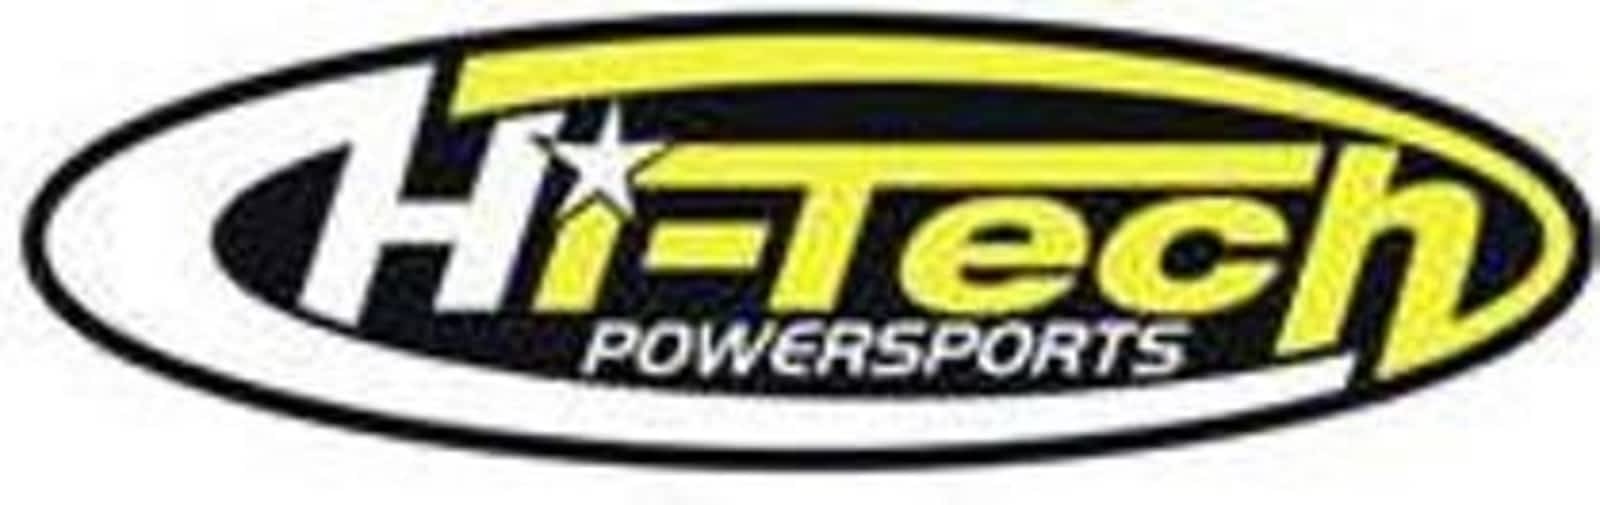 Hi Tech Power Sports - Opening Hours - 245 Baig Blvd Moncton Nb